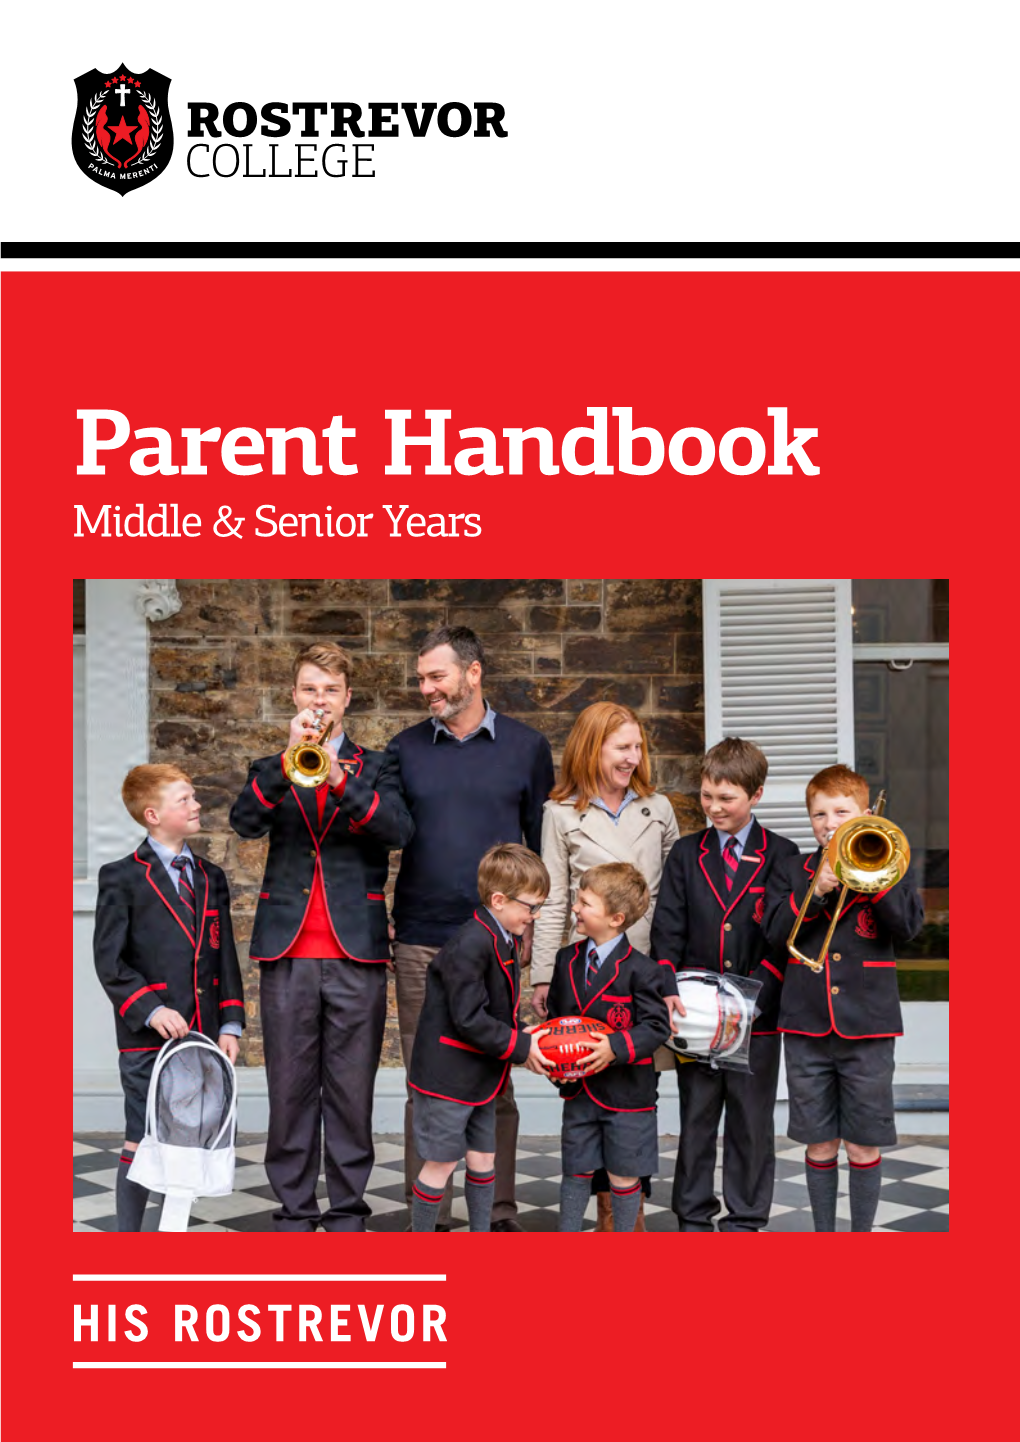 Parent Handbook Middle & Senior Years